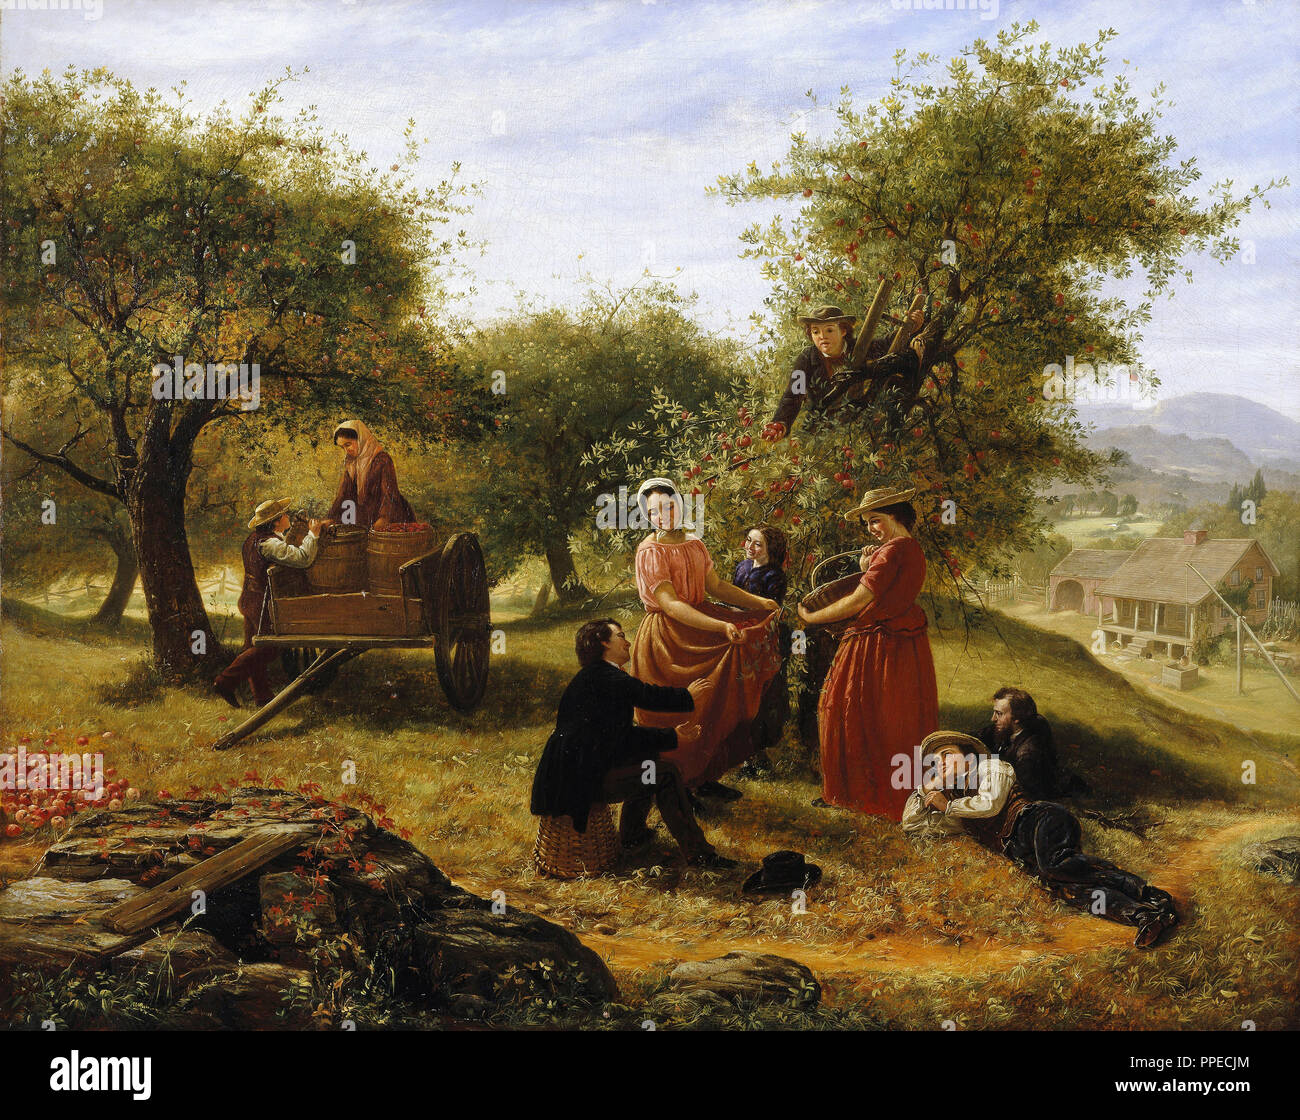 Jerome Thompson, Apple Sammeln 1856 Öl auf Leinwand. Brooklyn Museum, New York City, USA. Stockfoto